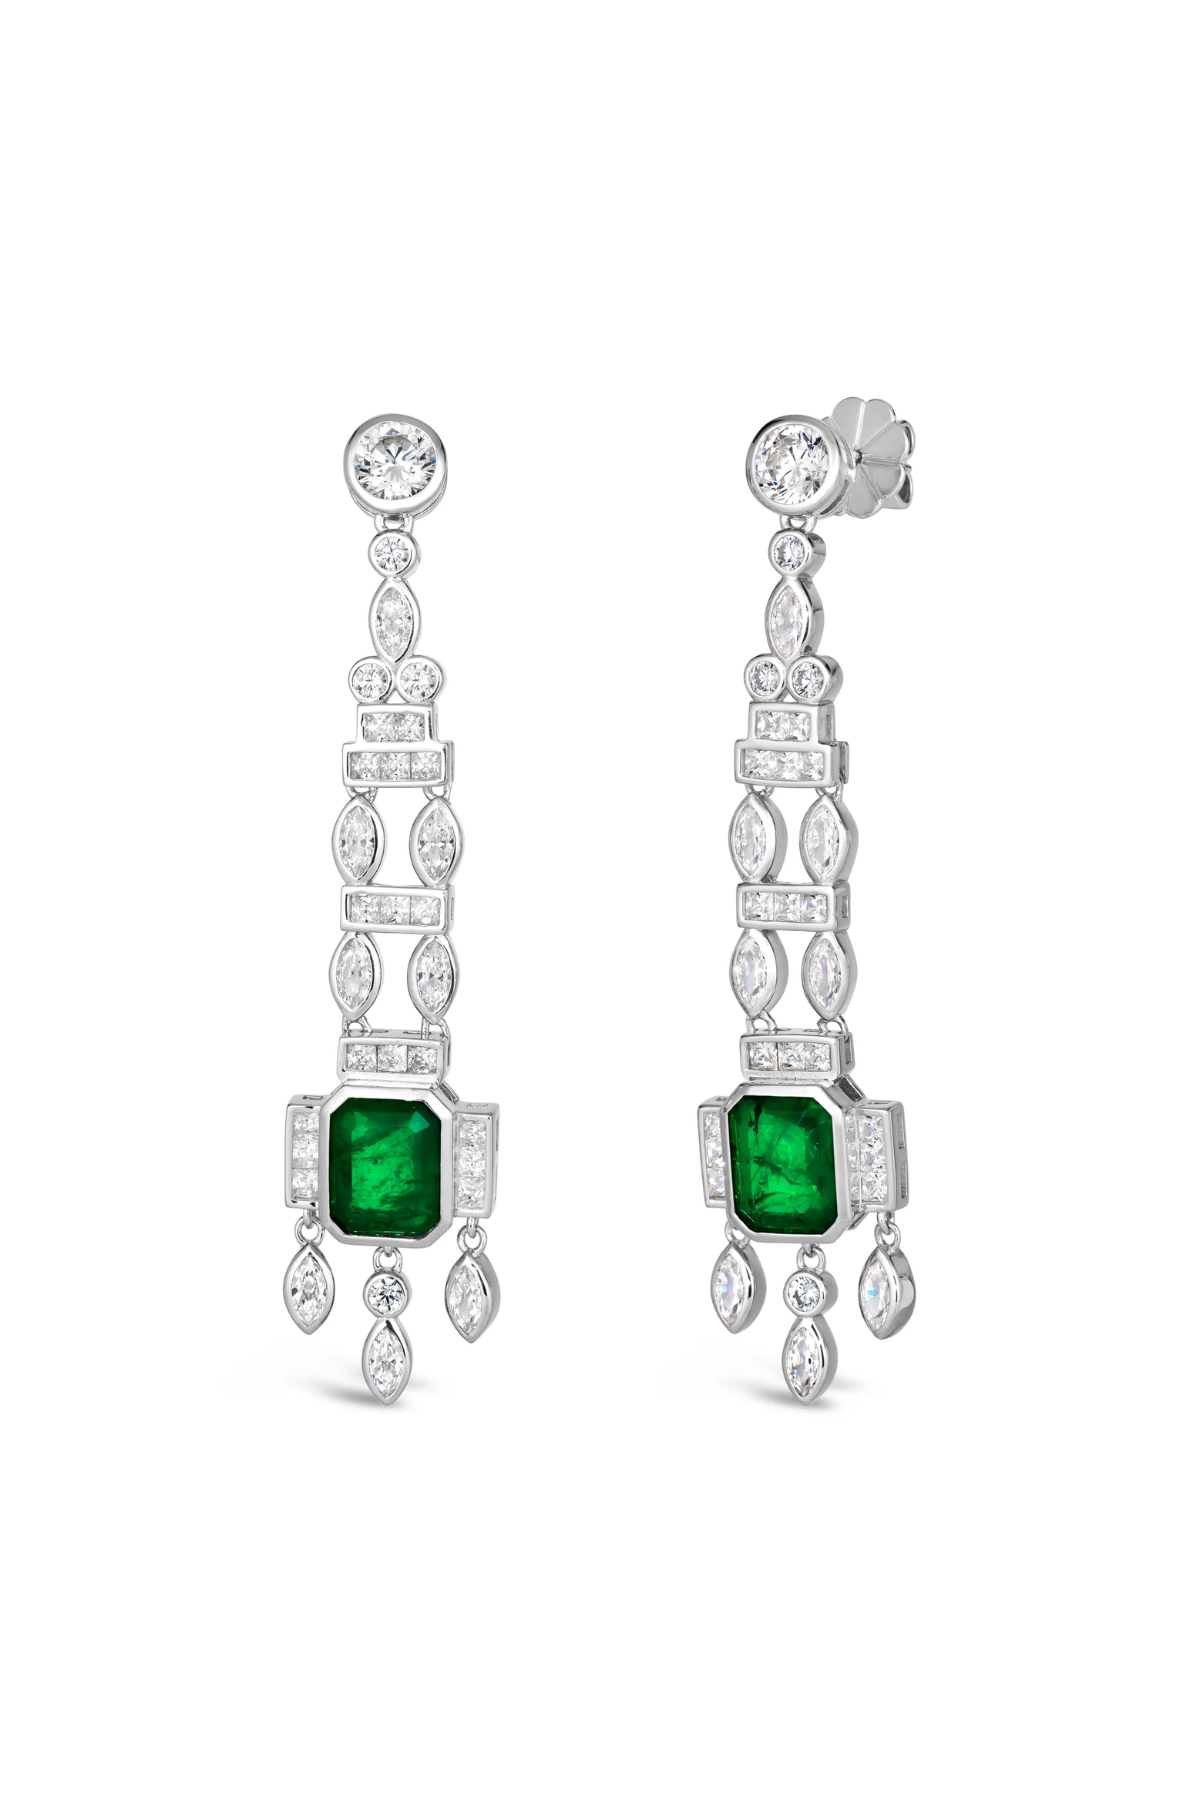 Onassis 6 Carat Emerald Drop Earrings